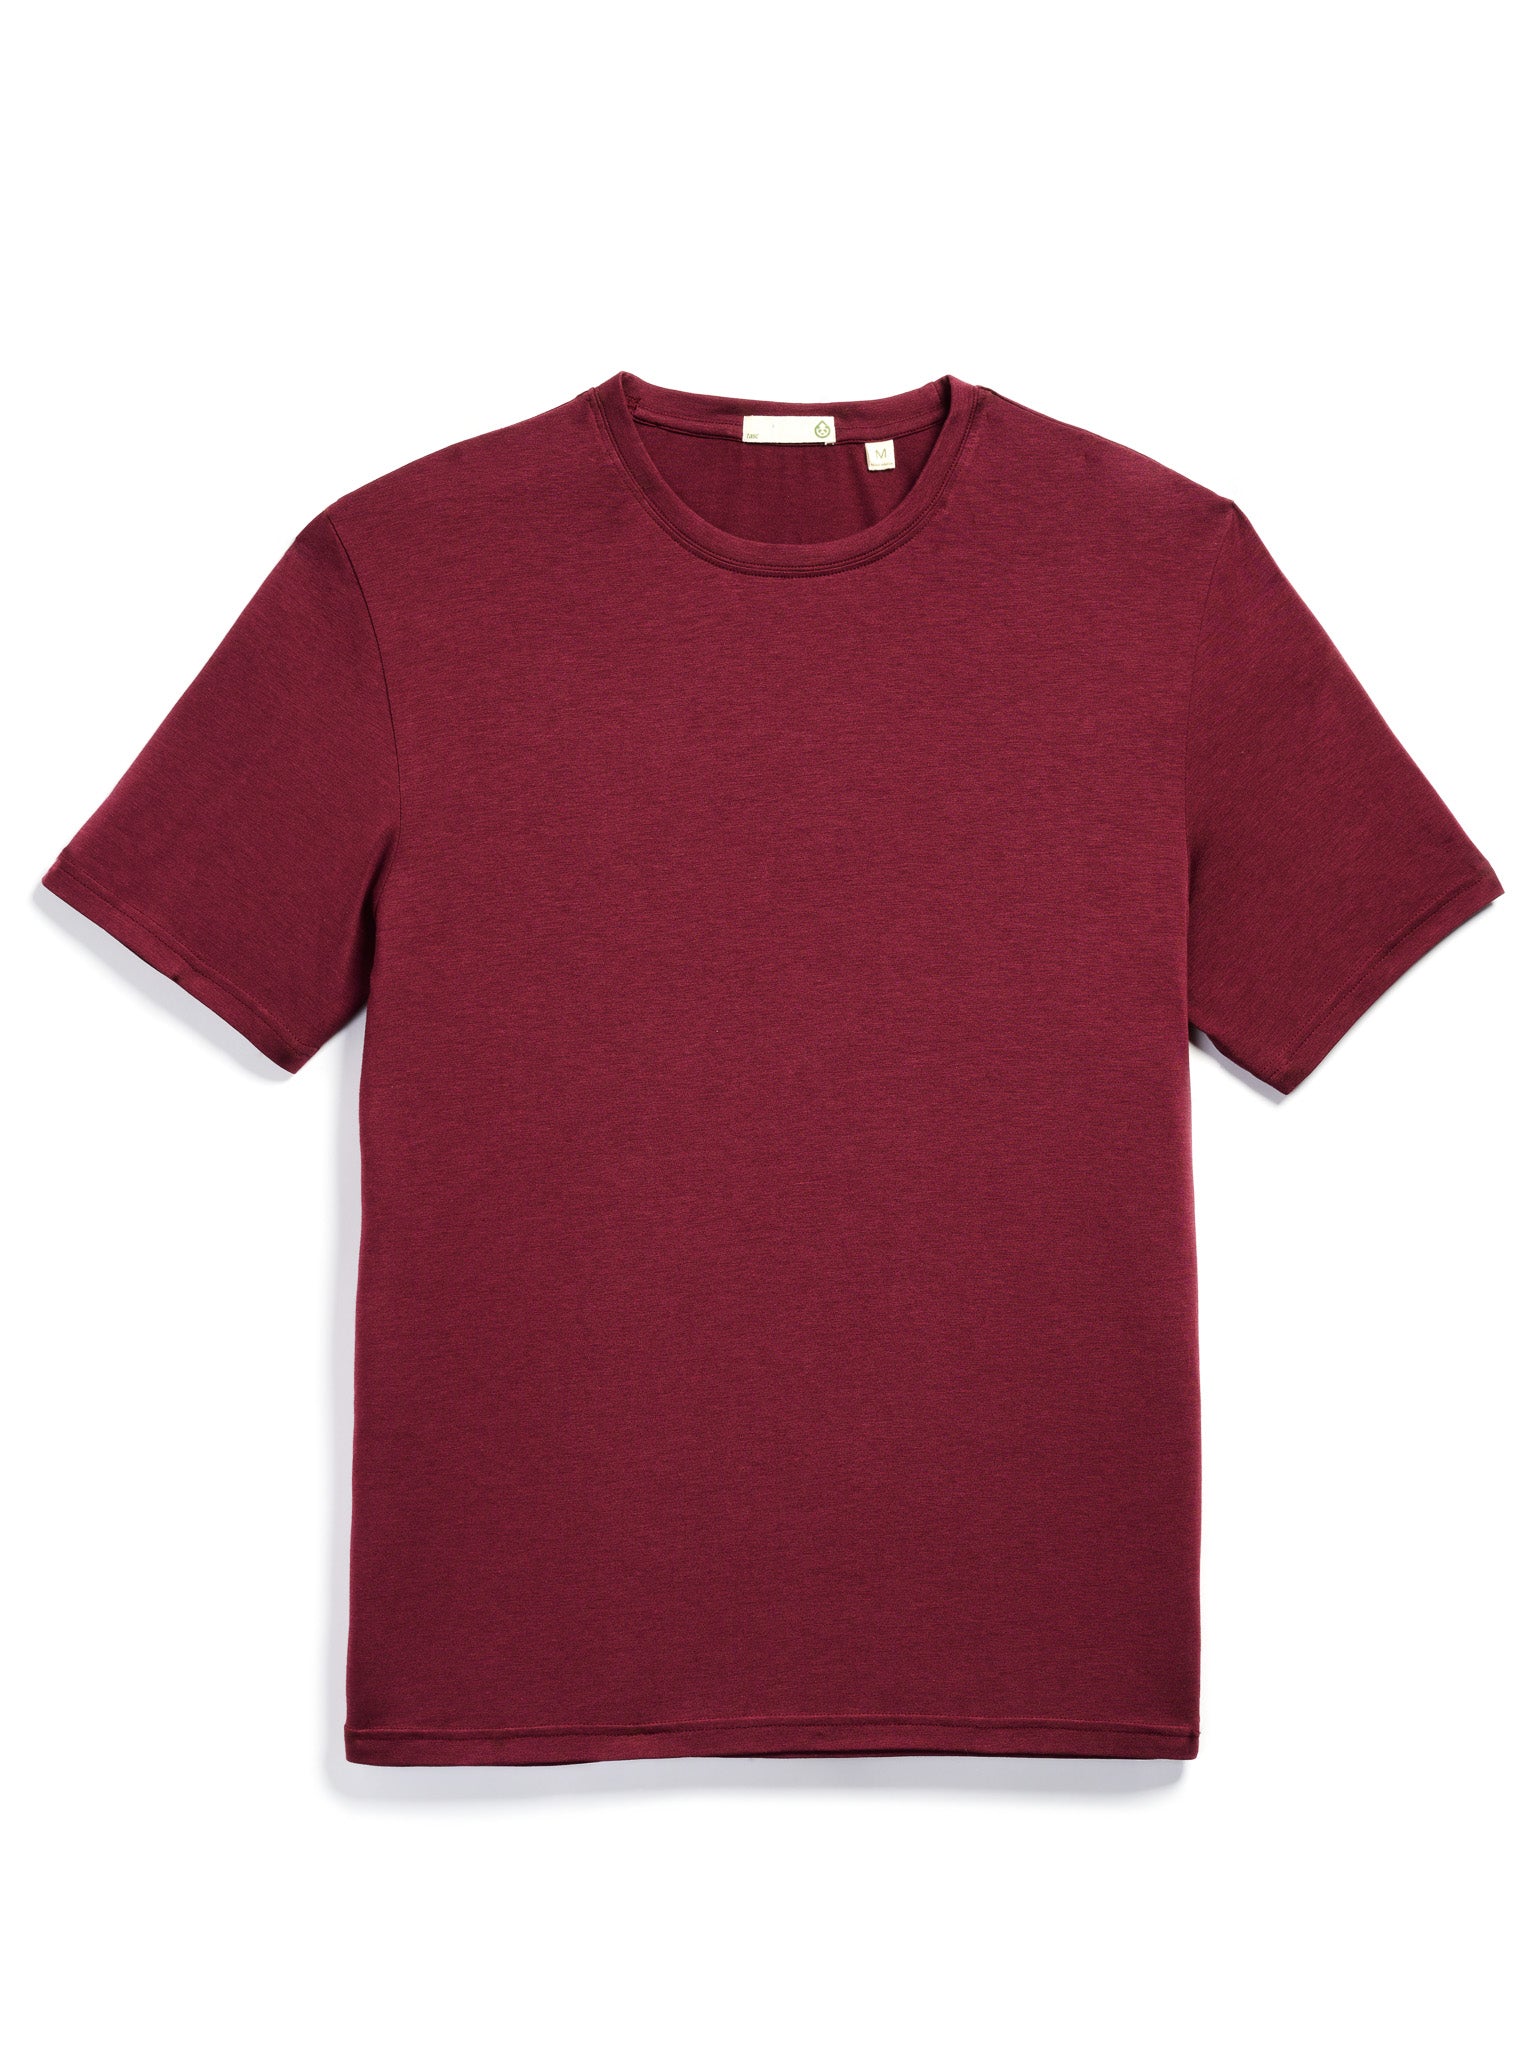 Pimaluxe T-Shirt tasc Performance (Wineberry)